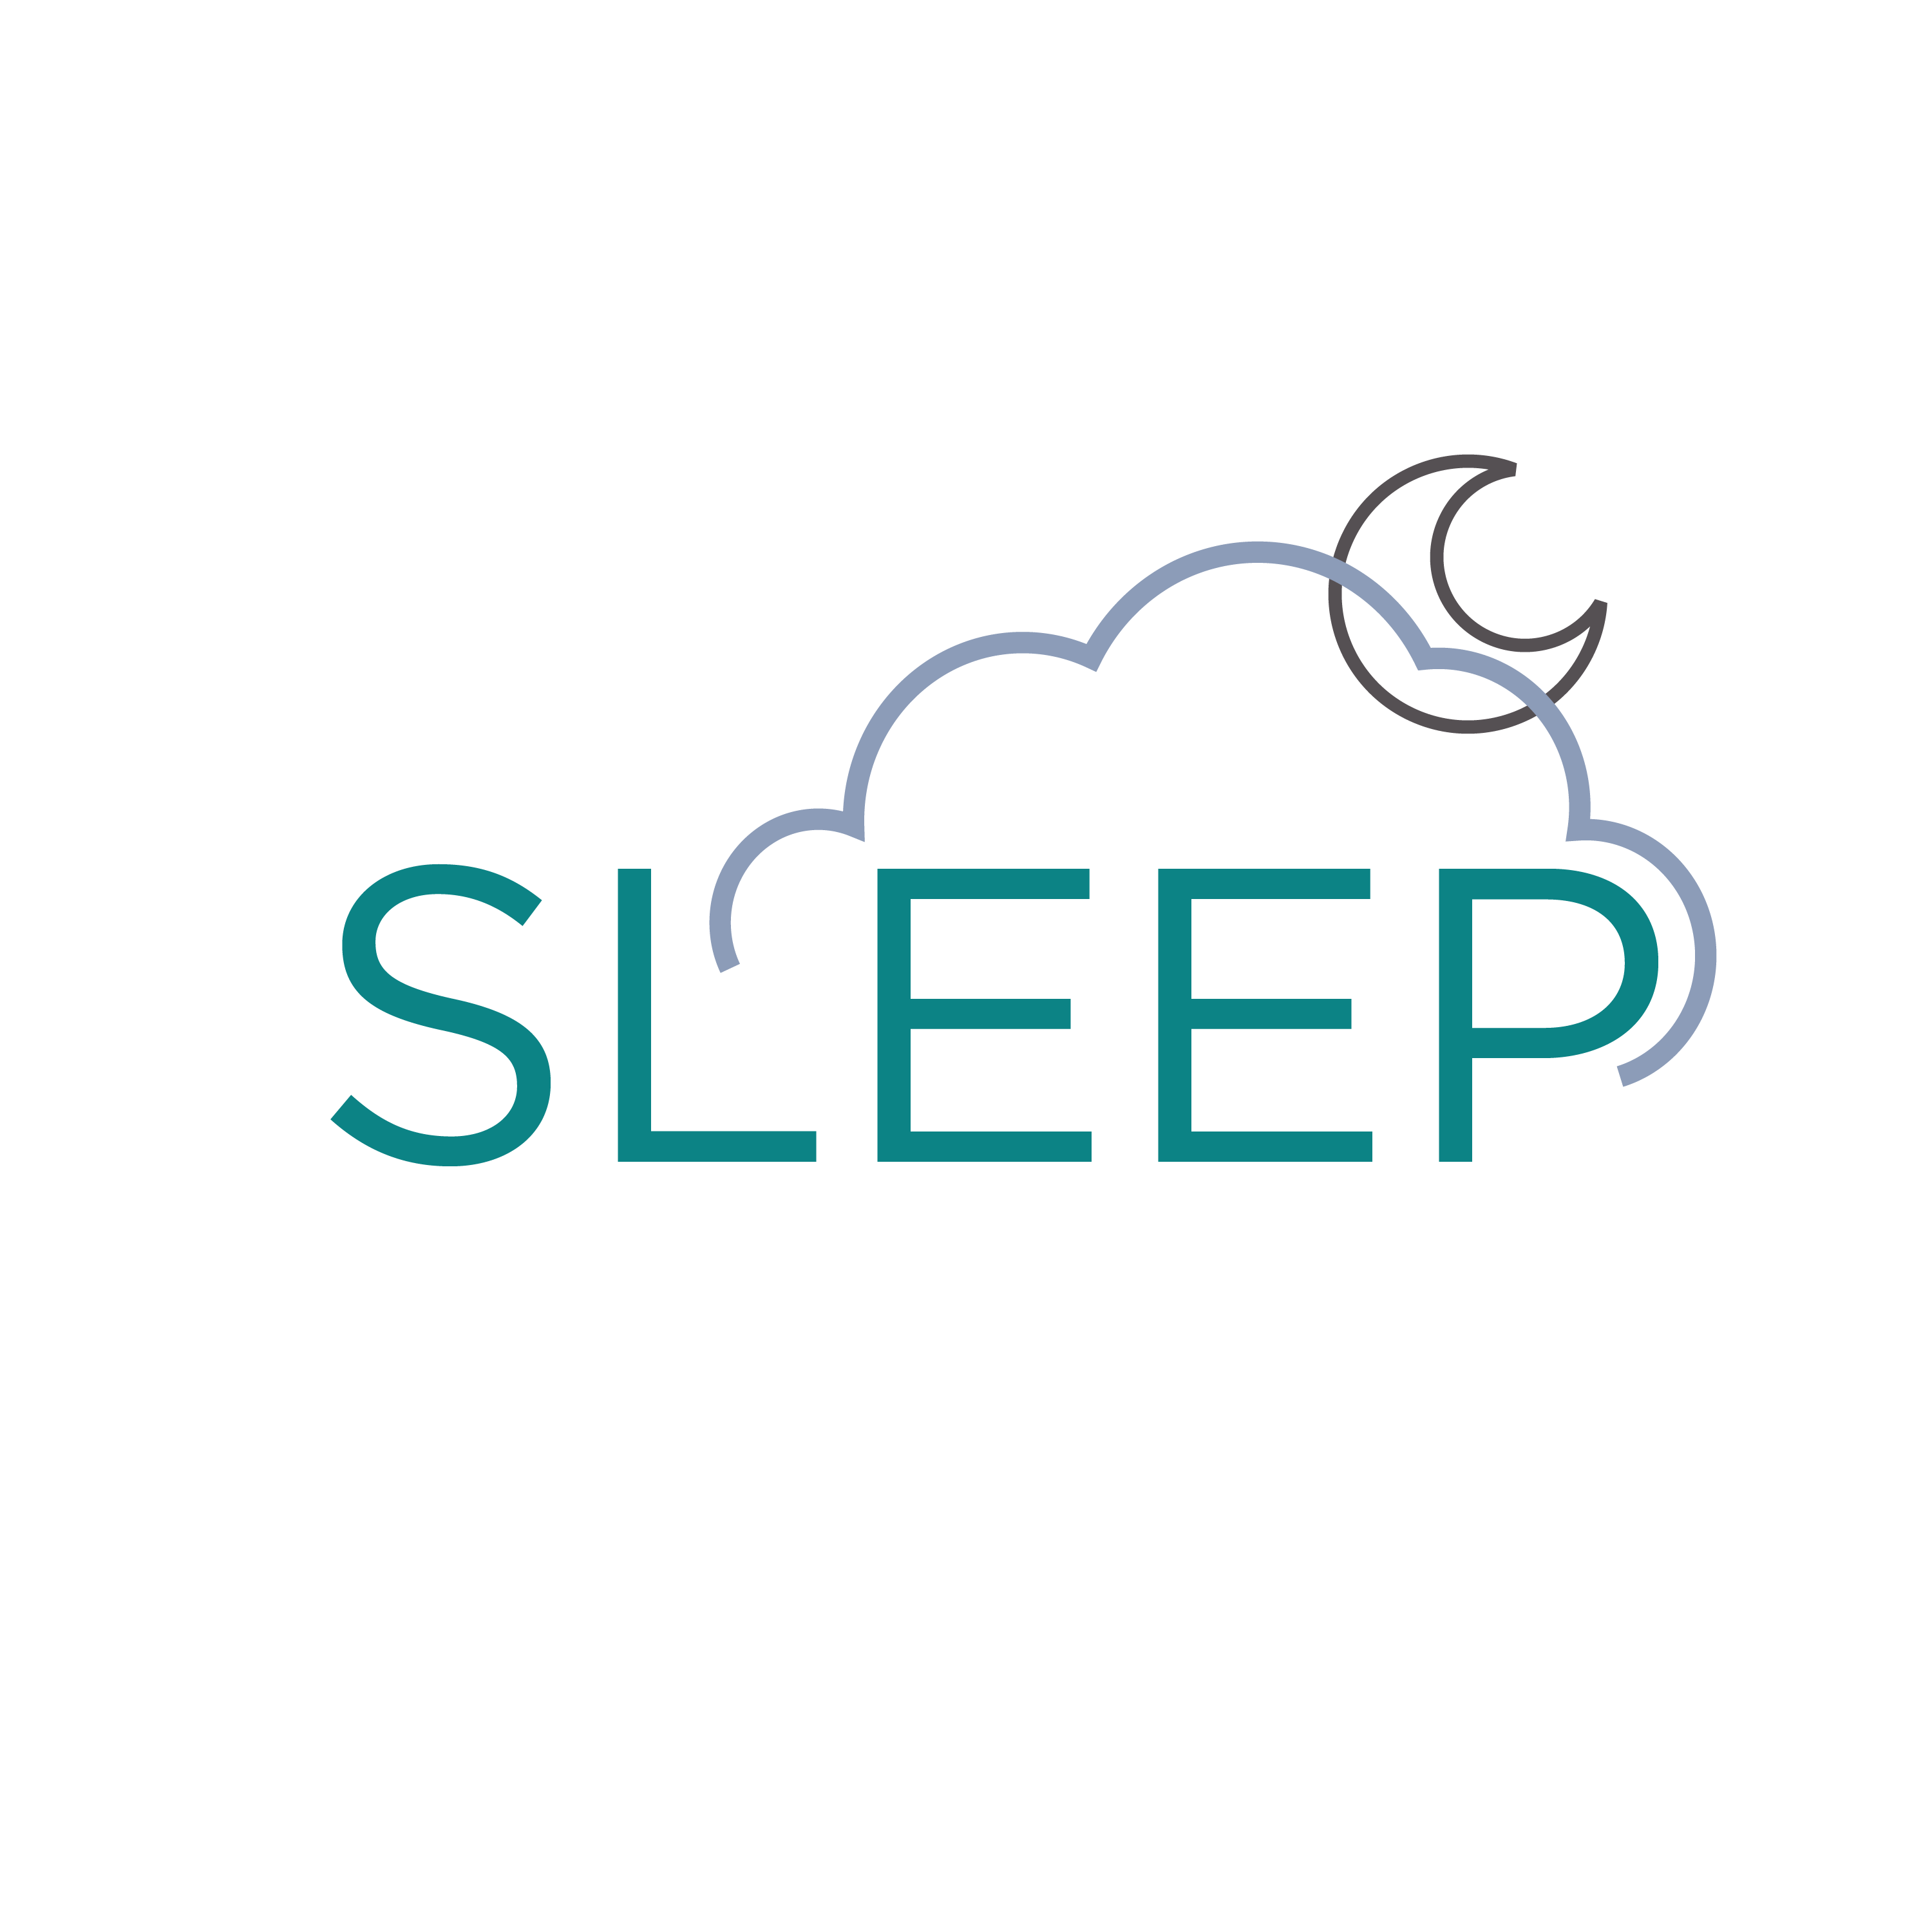 The SLEEP project logo.